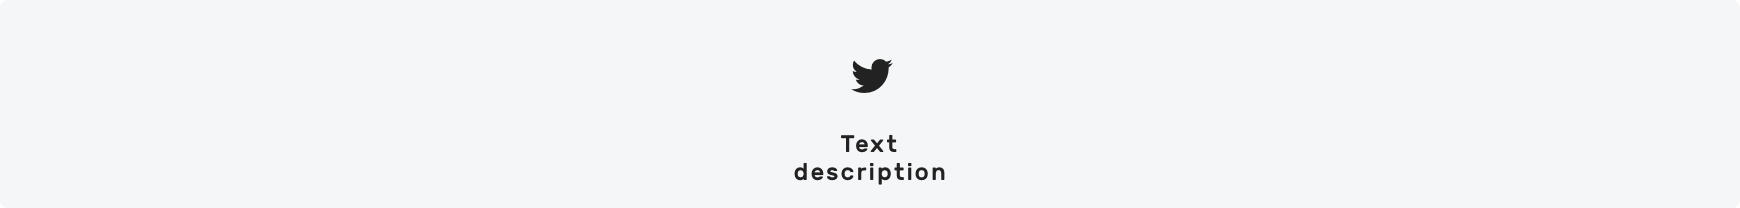 Button / Vertical / Icon + Text example